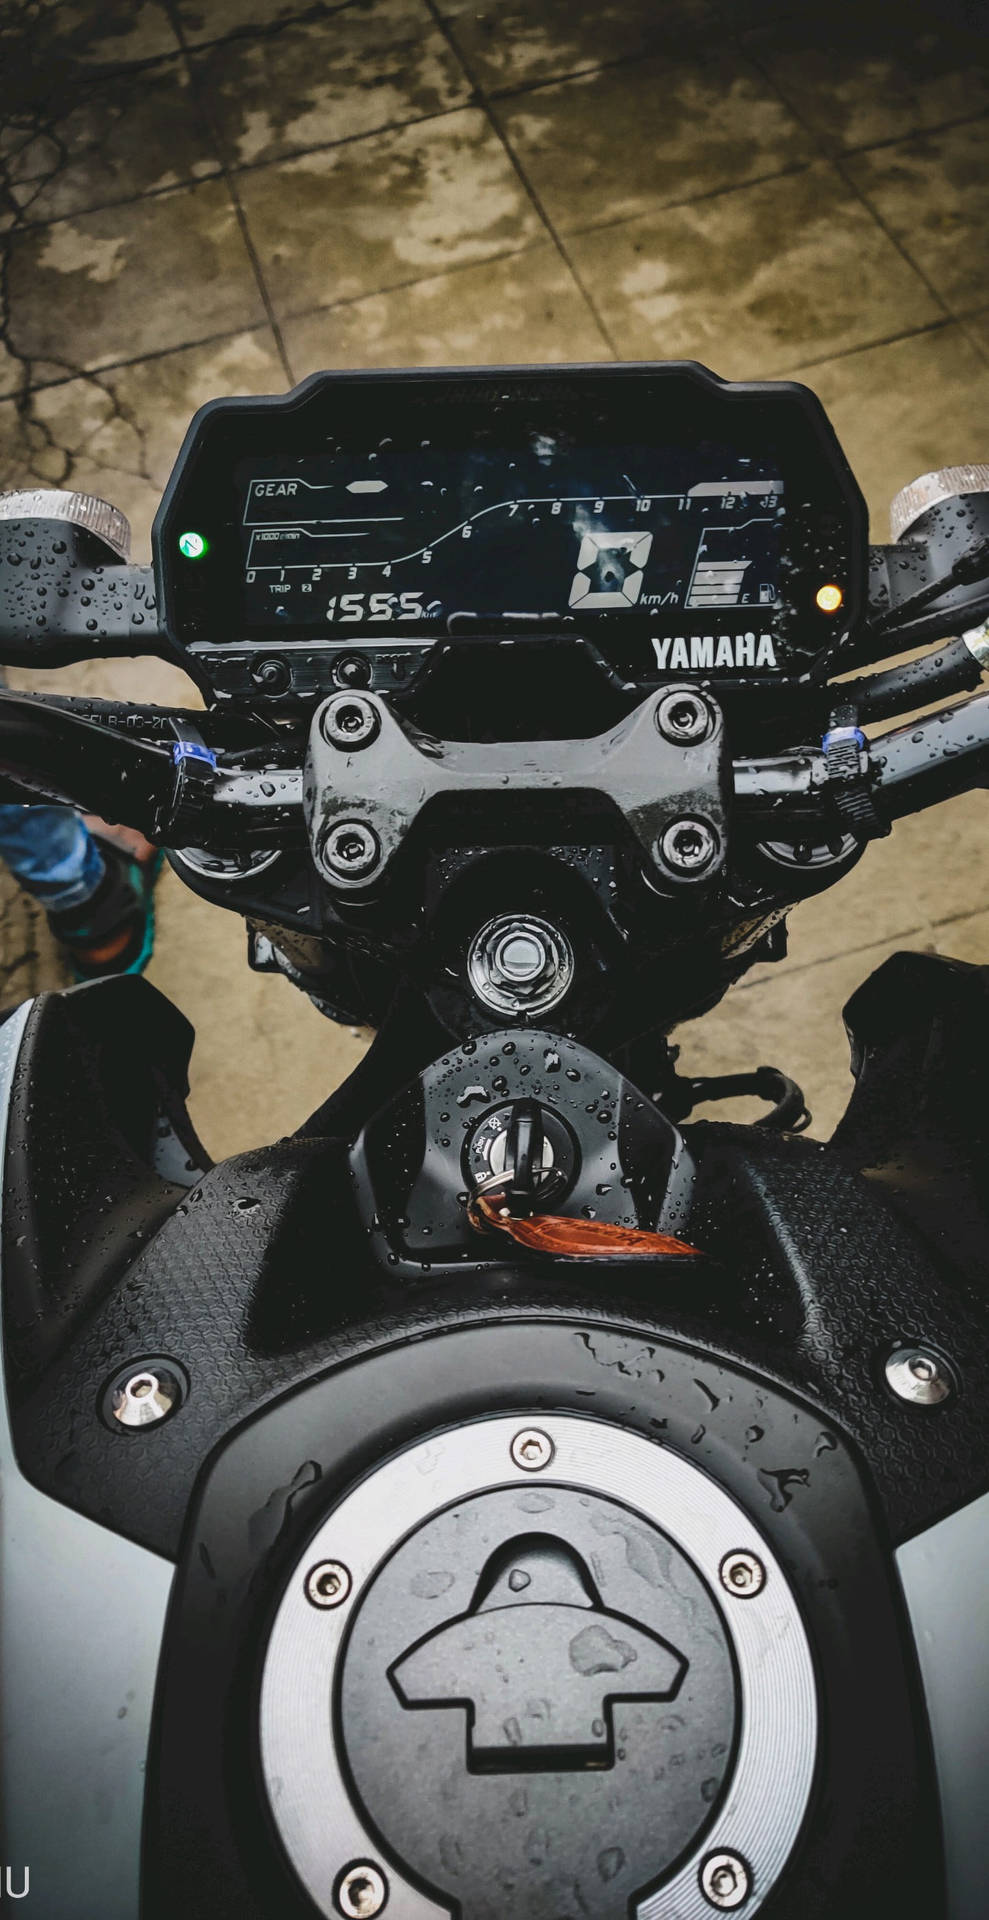 Black Yamaha Mt 15 Bike Details